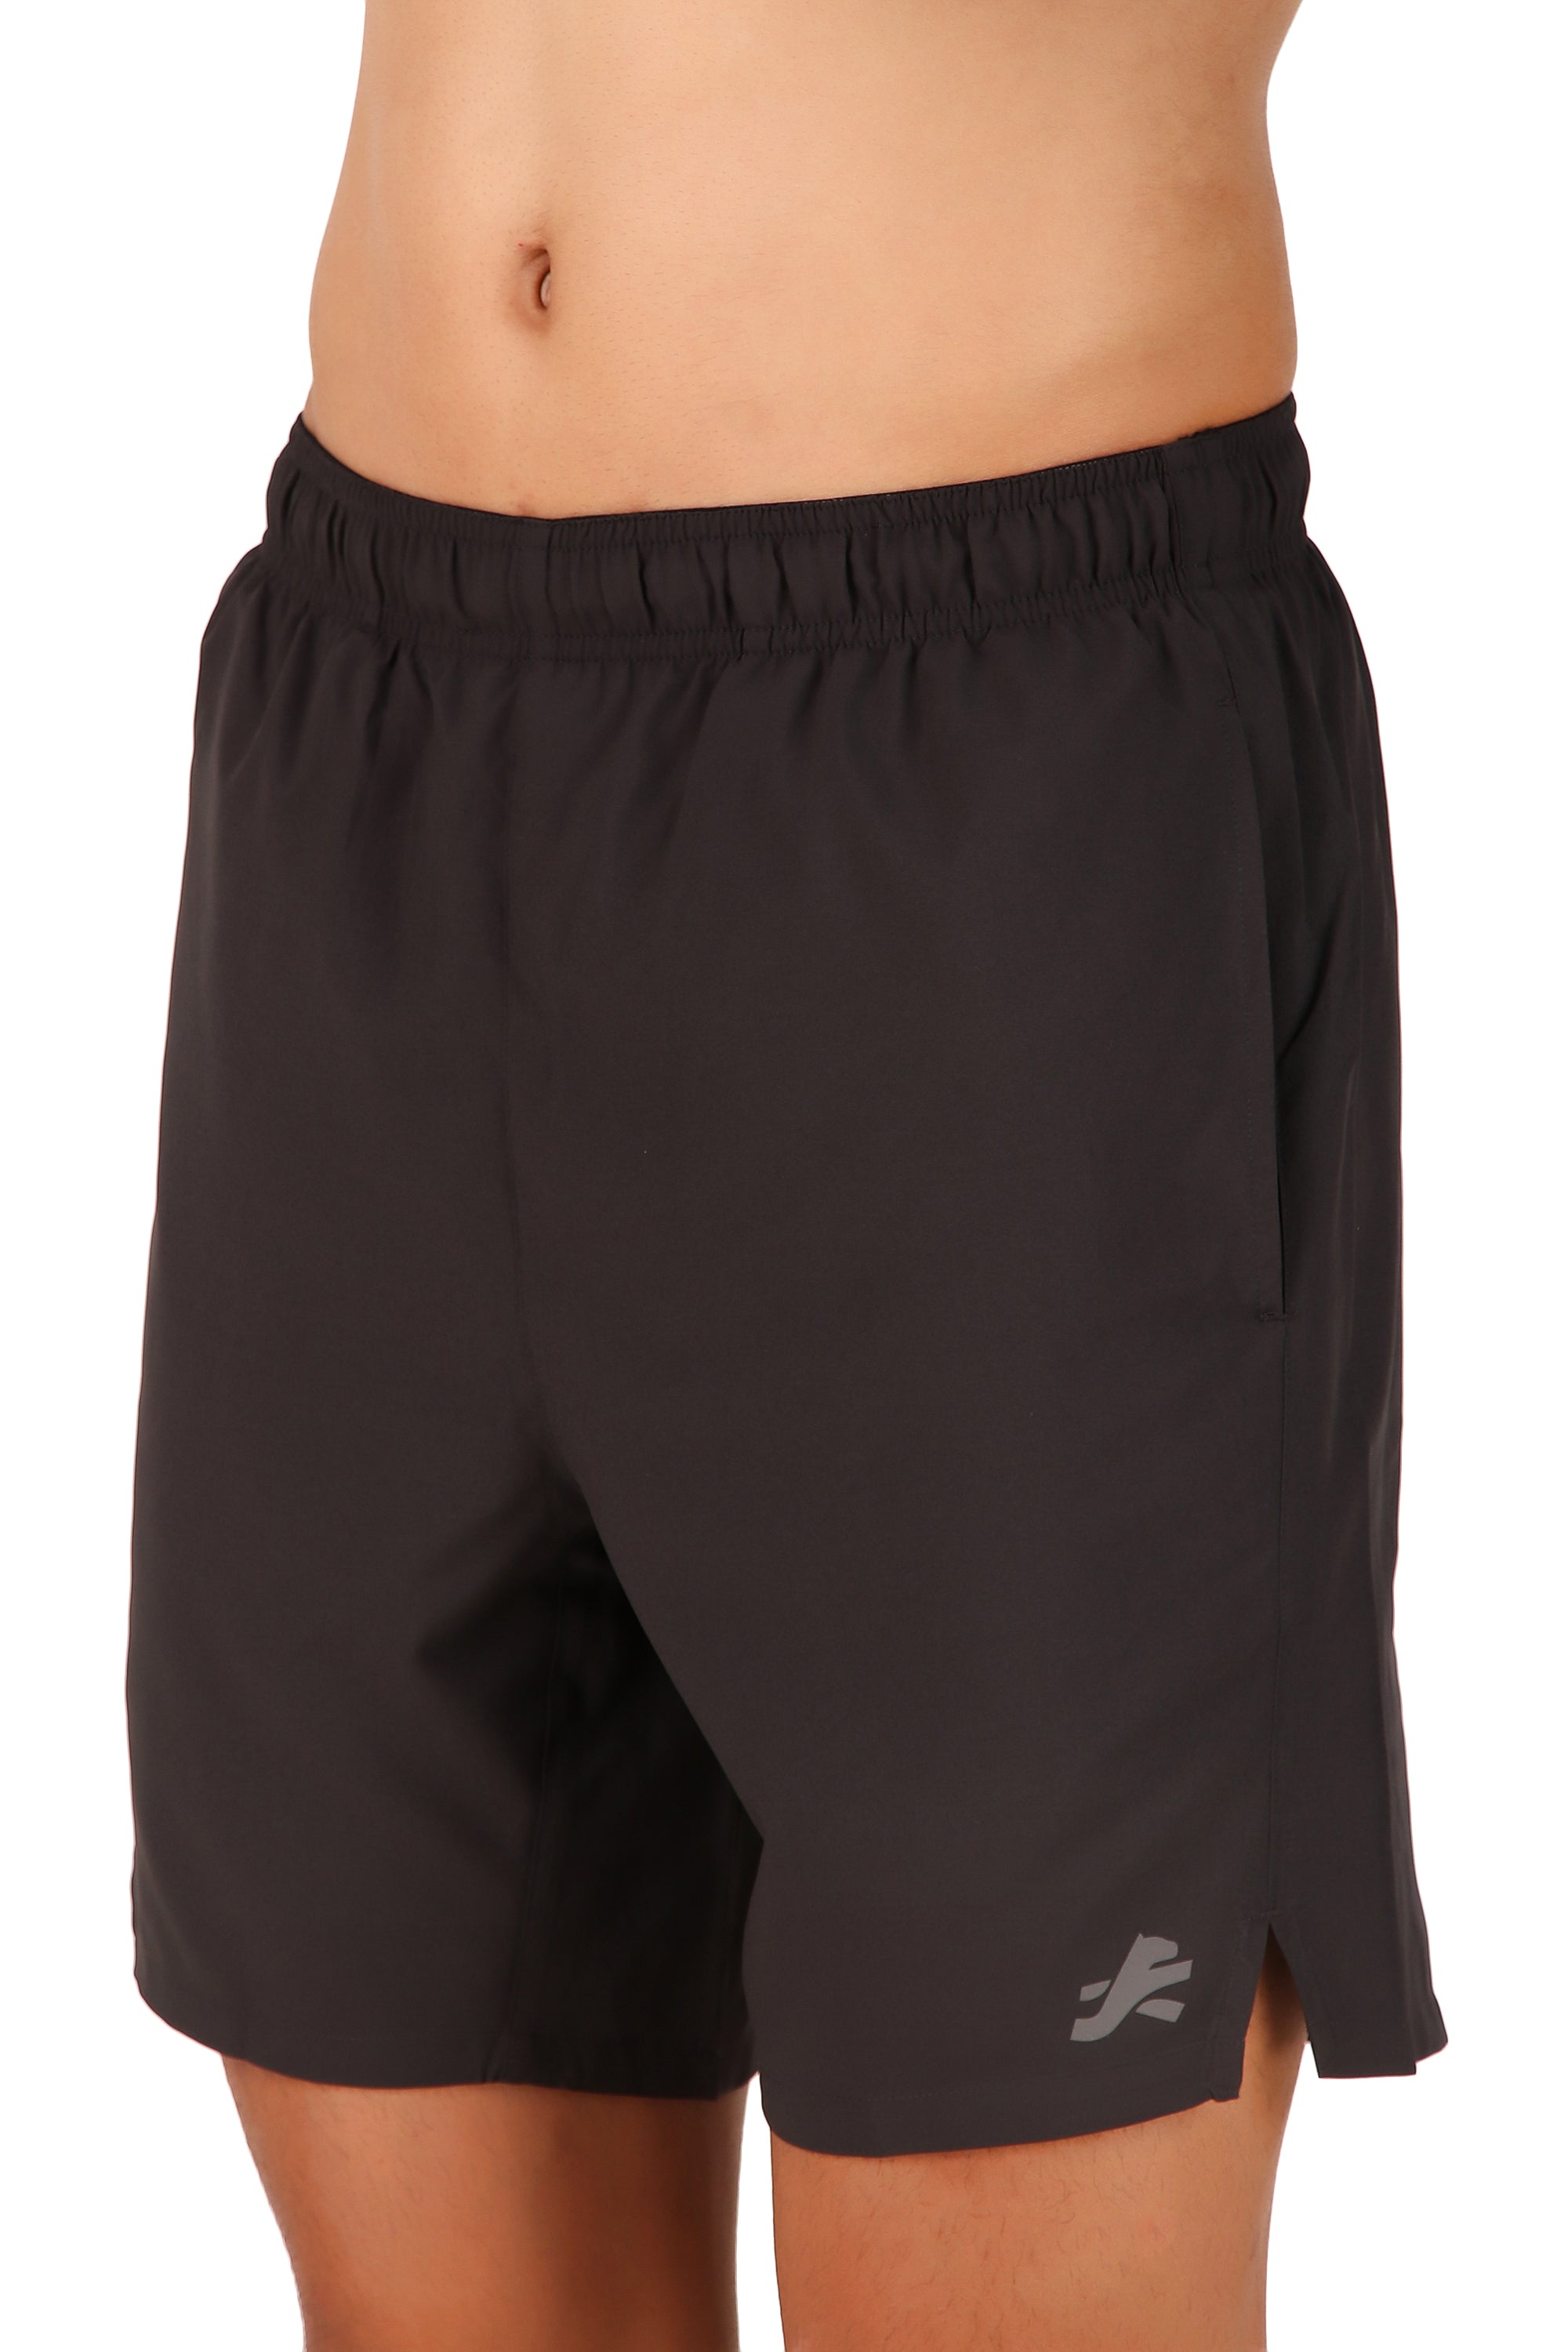 Ultra Lightweight Sports Shorts For Men (Coal Grey)